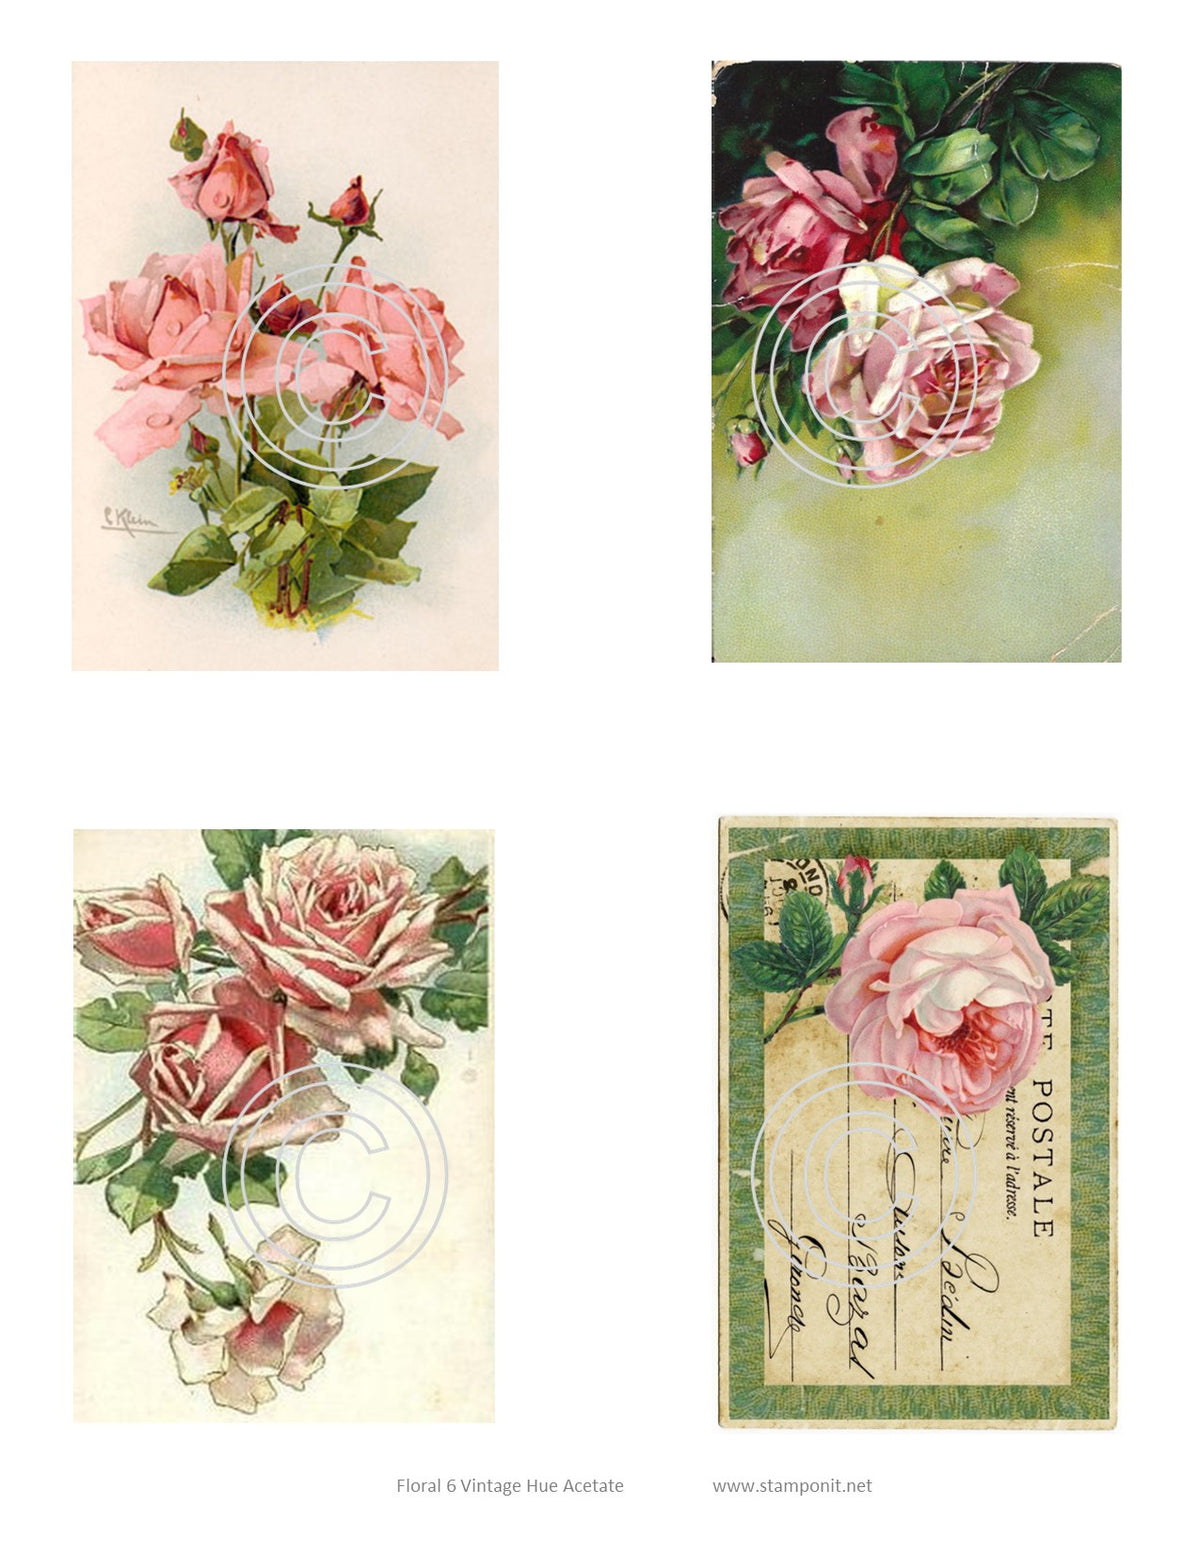 Florals 6, Vintage Hue Acetate